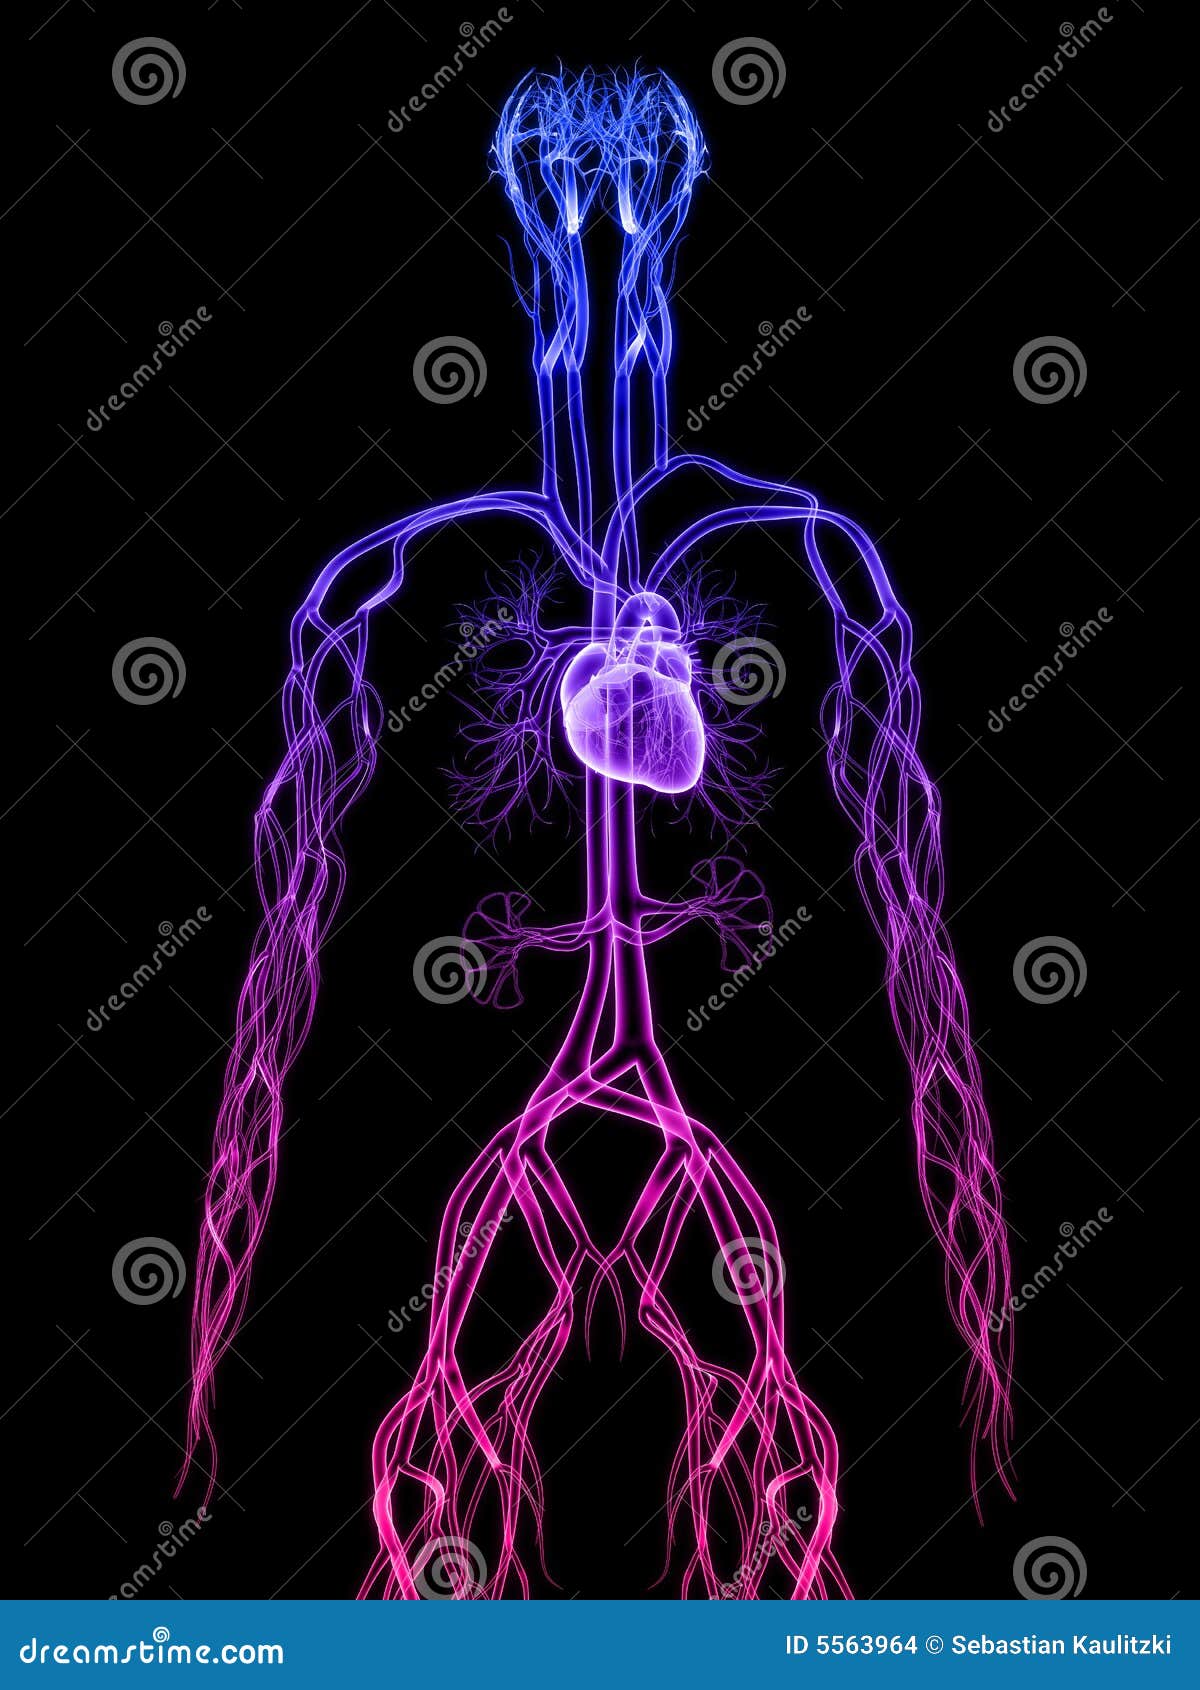 cardiovascular system